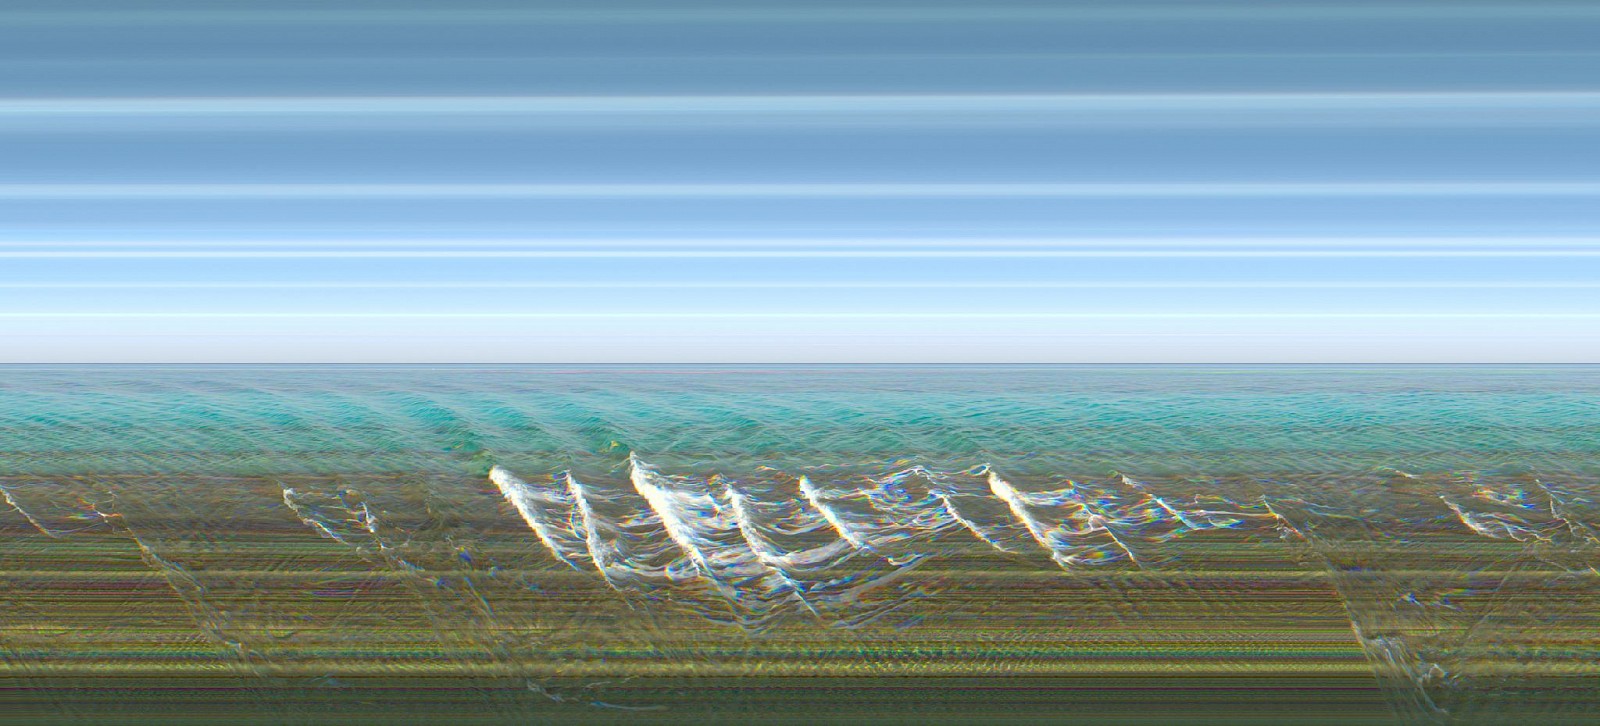 Jay Mark Johnson, COZUMEL WAVES #16, 2009 Cozumel MX
archival pigment on paper, mounted on aluminum, 40 x 88 in. (101.6 x 223.5 cm)